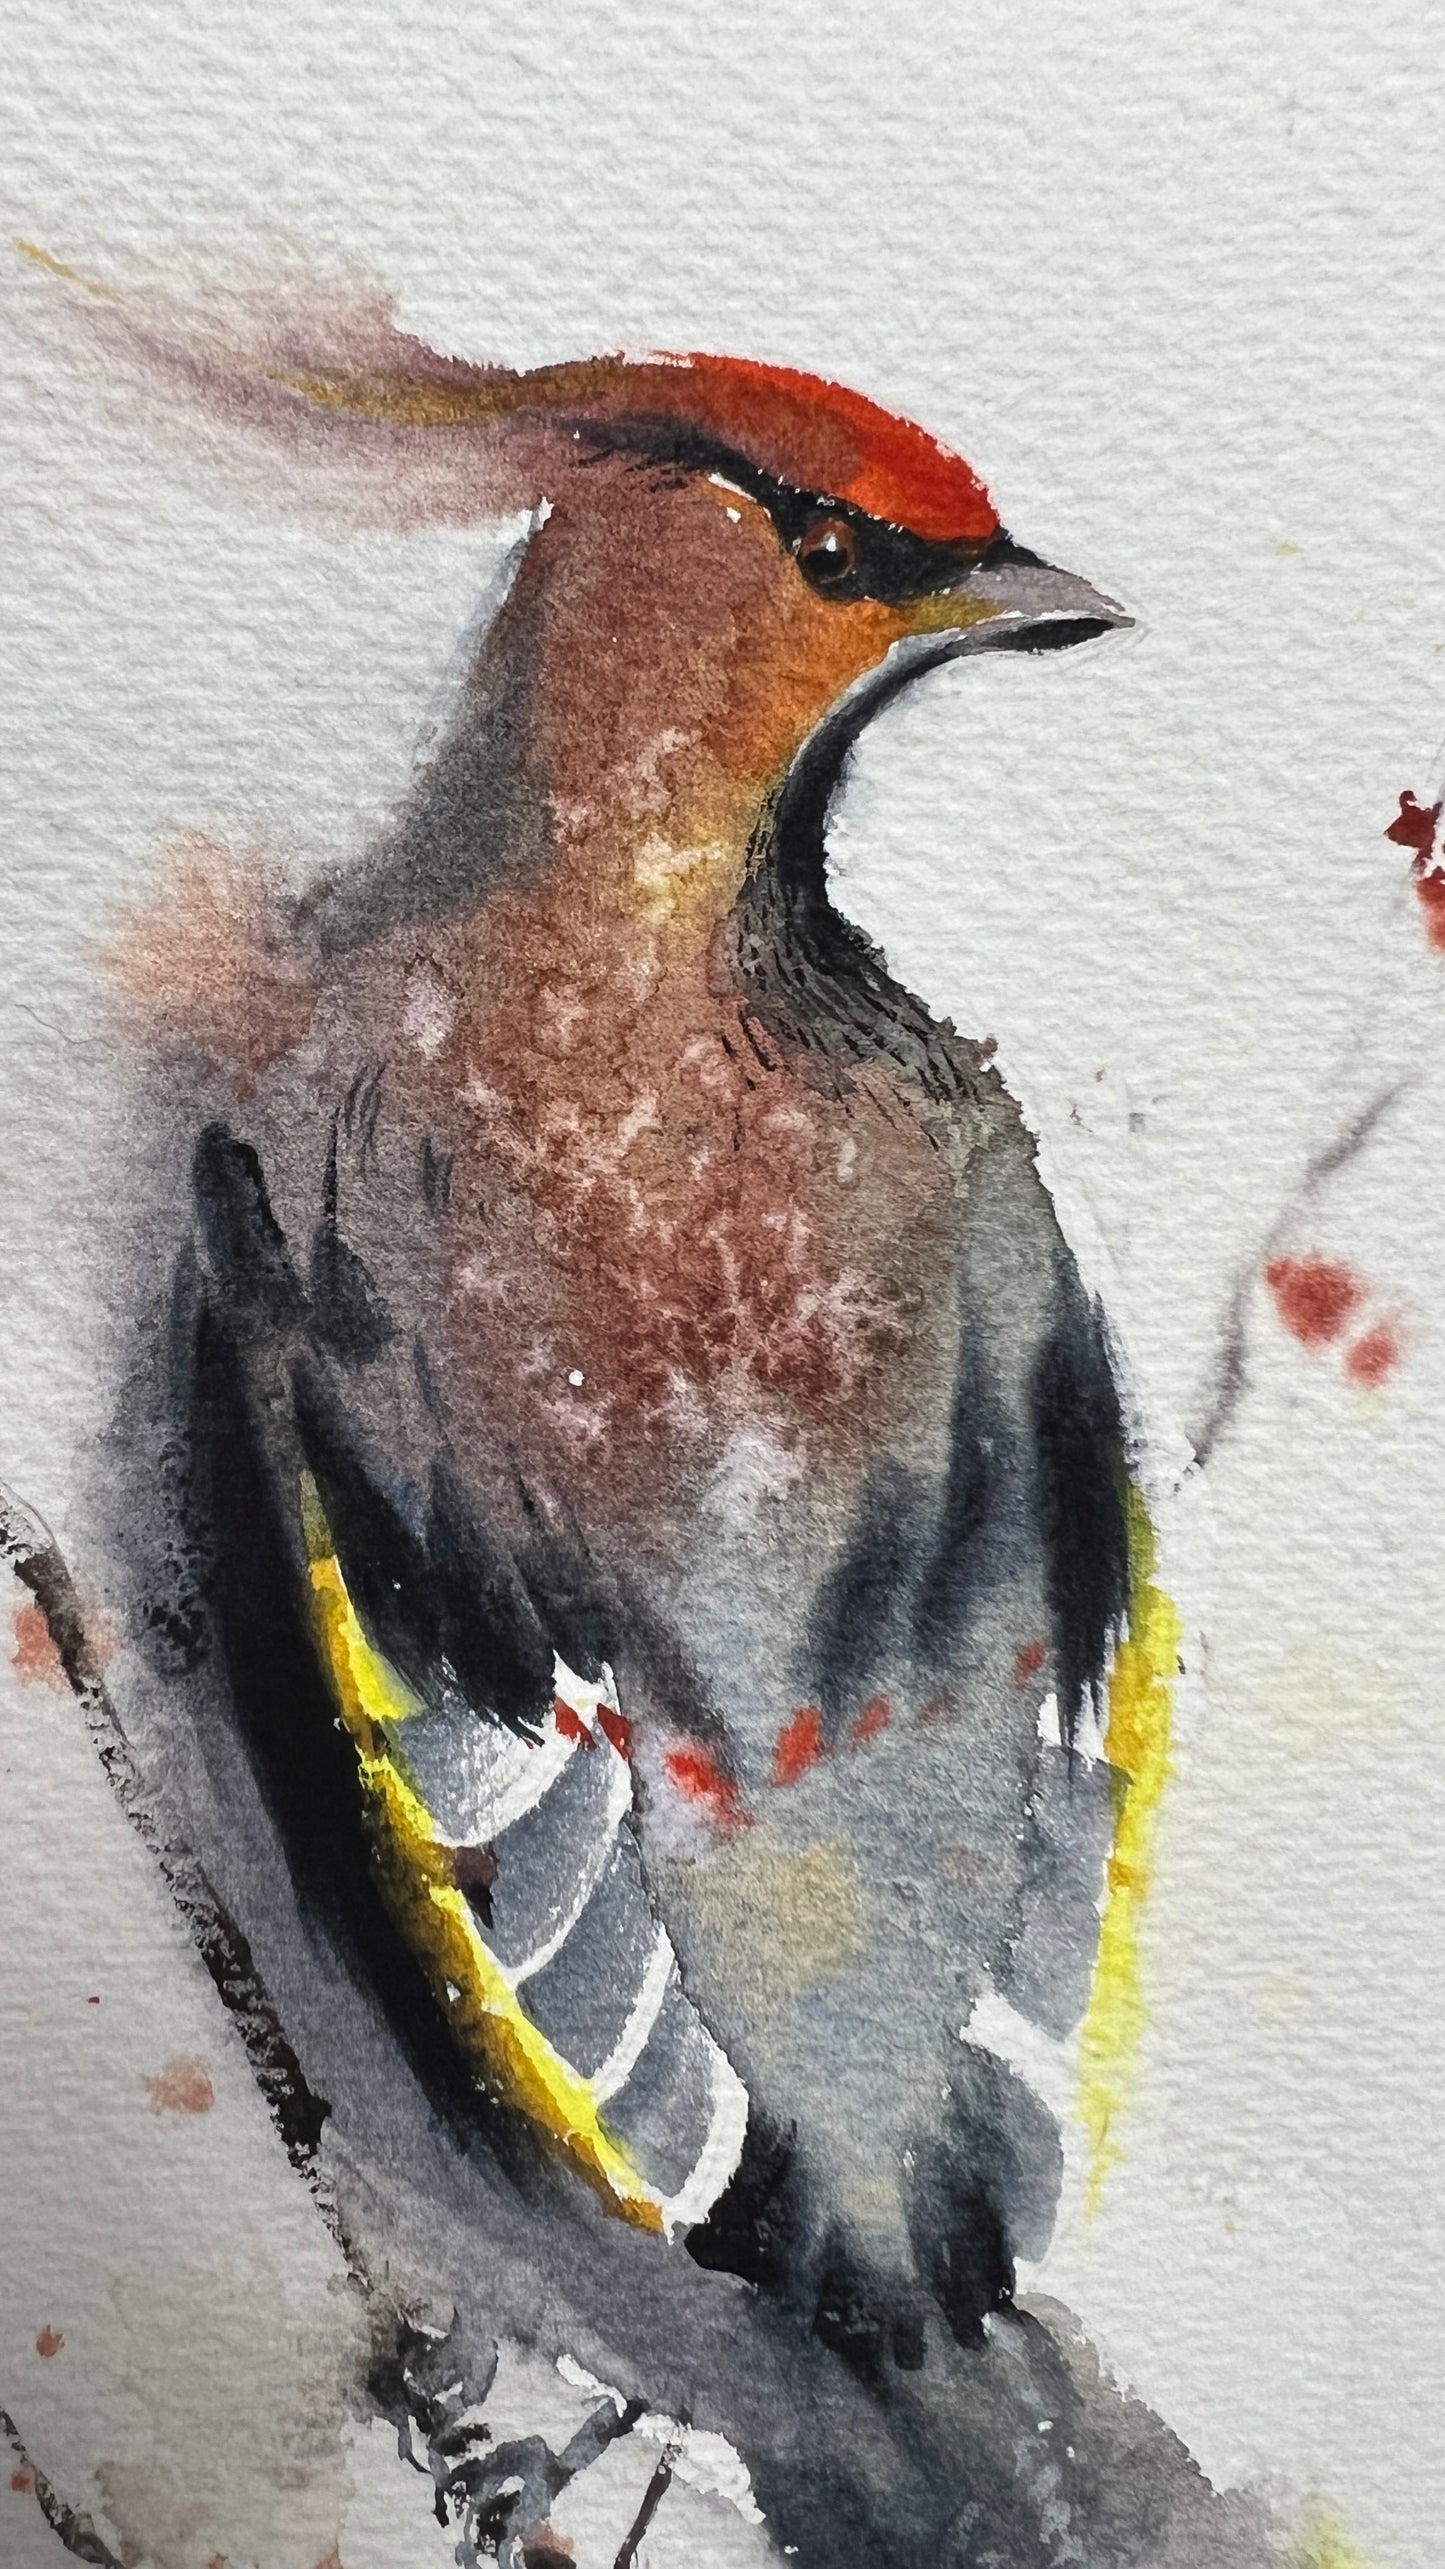 Waxwing Bird Painting, Watercolor Original Art, Wildlife, Small Artwork, Home Wall Decor